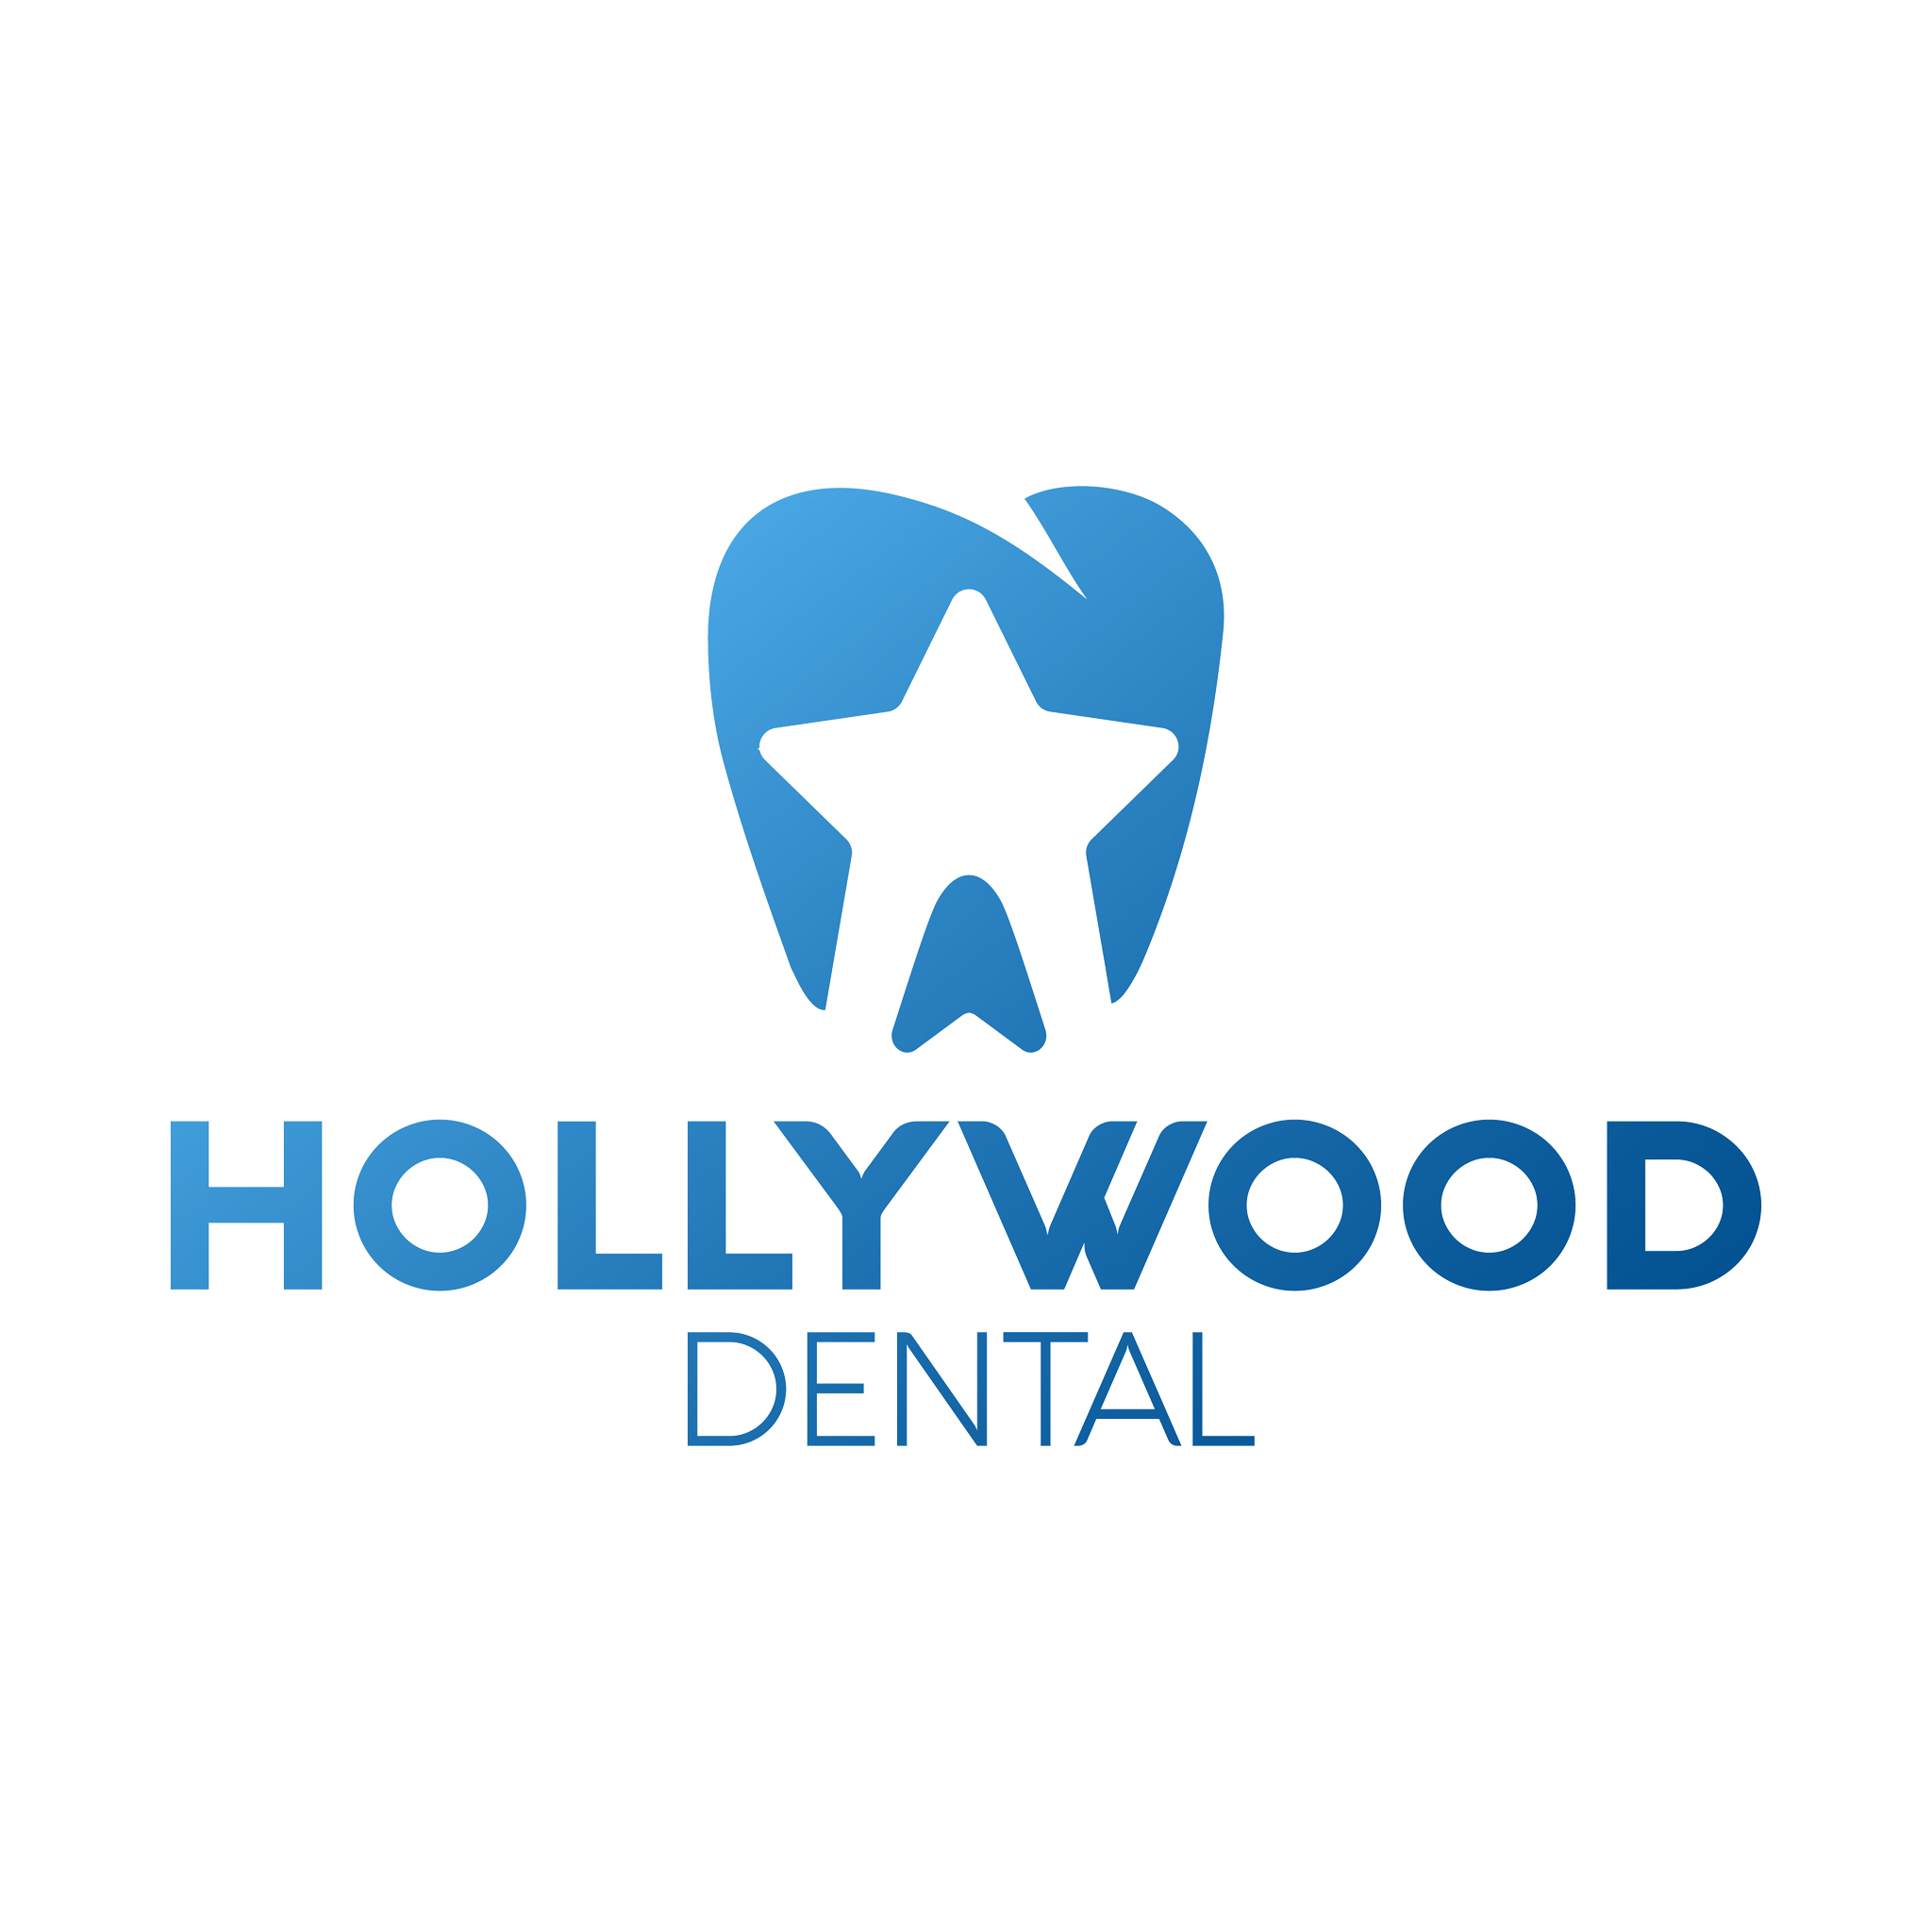 Hollywood Dental